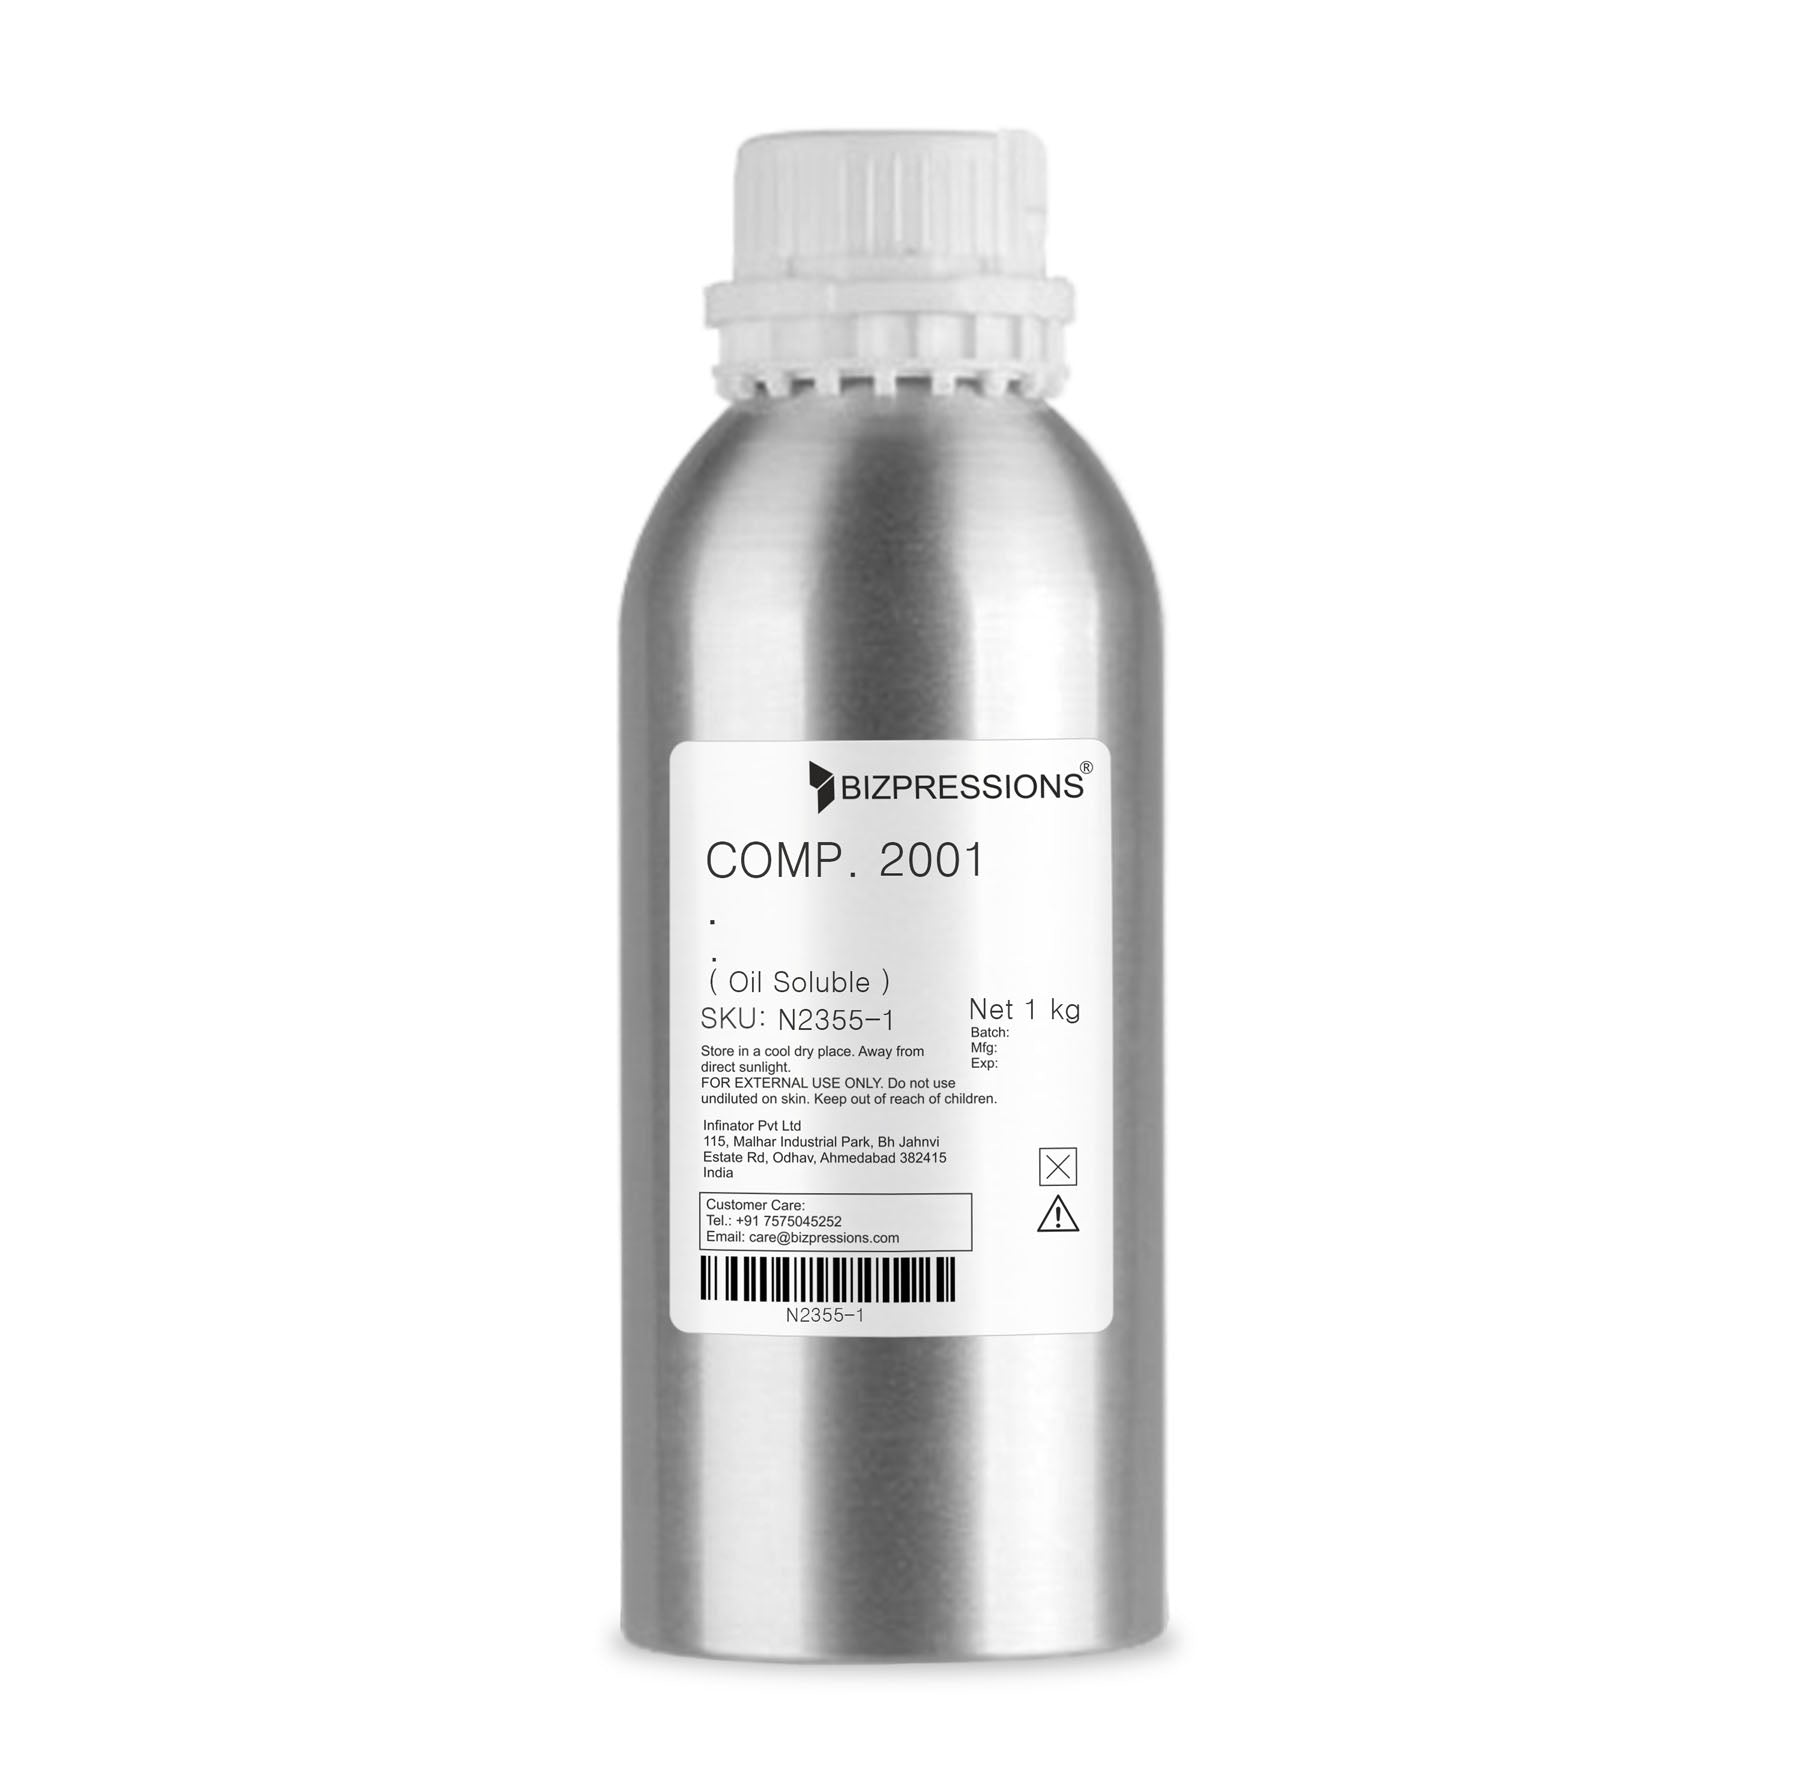 COMP. 2001 - Fragrance ( Oil Soluble ) - 1 kg